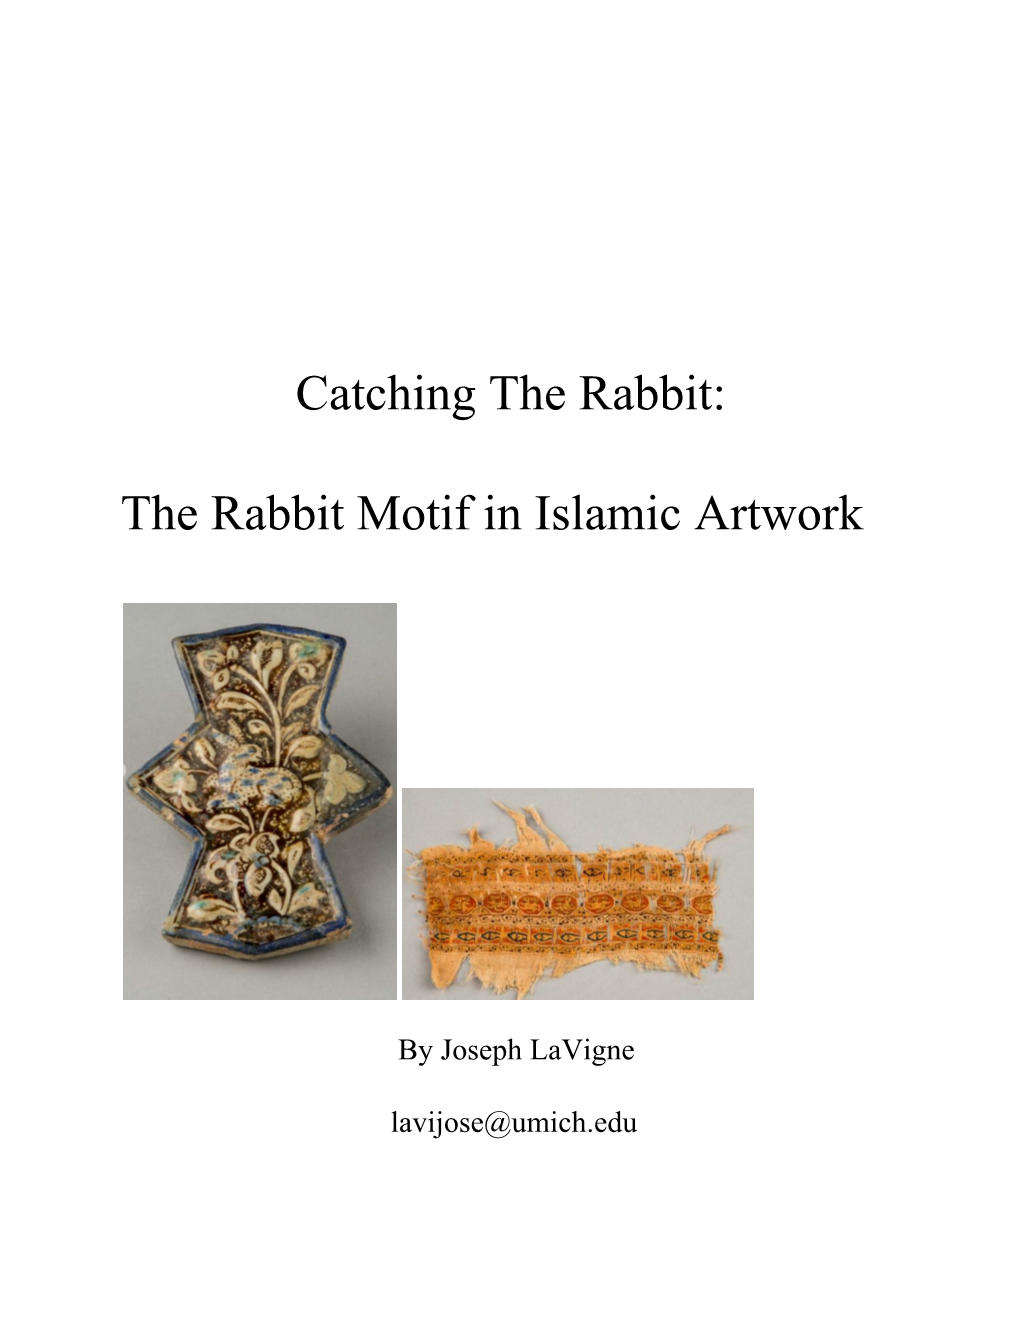 The Rabbit Motif in Islamic Artwork